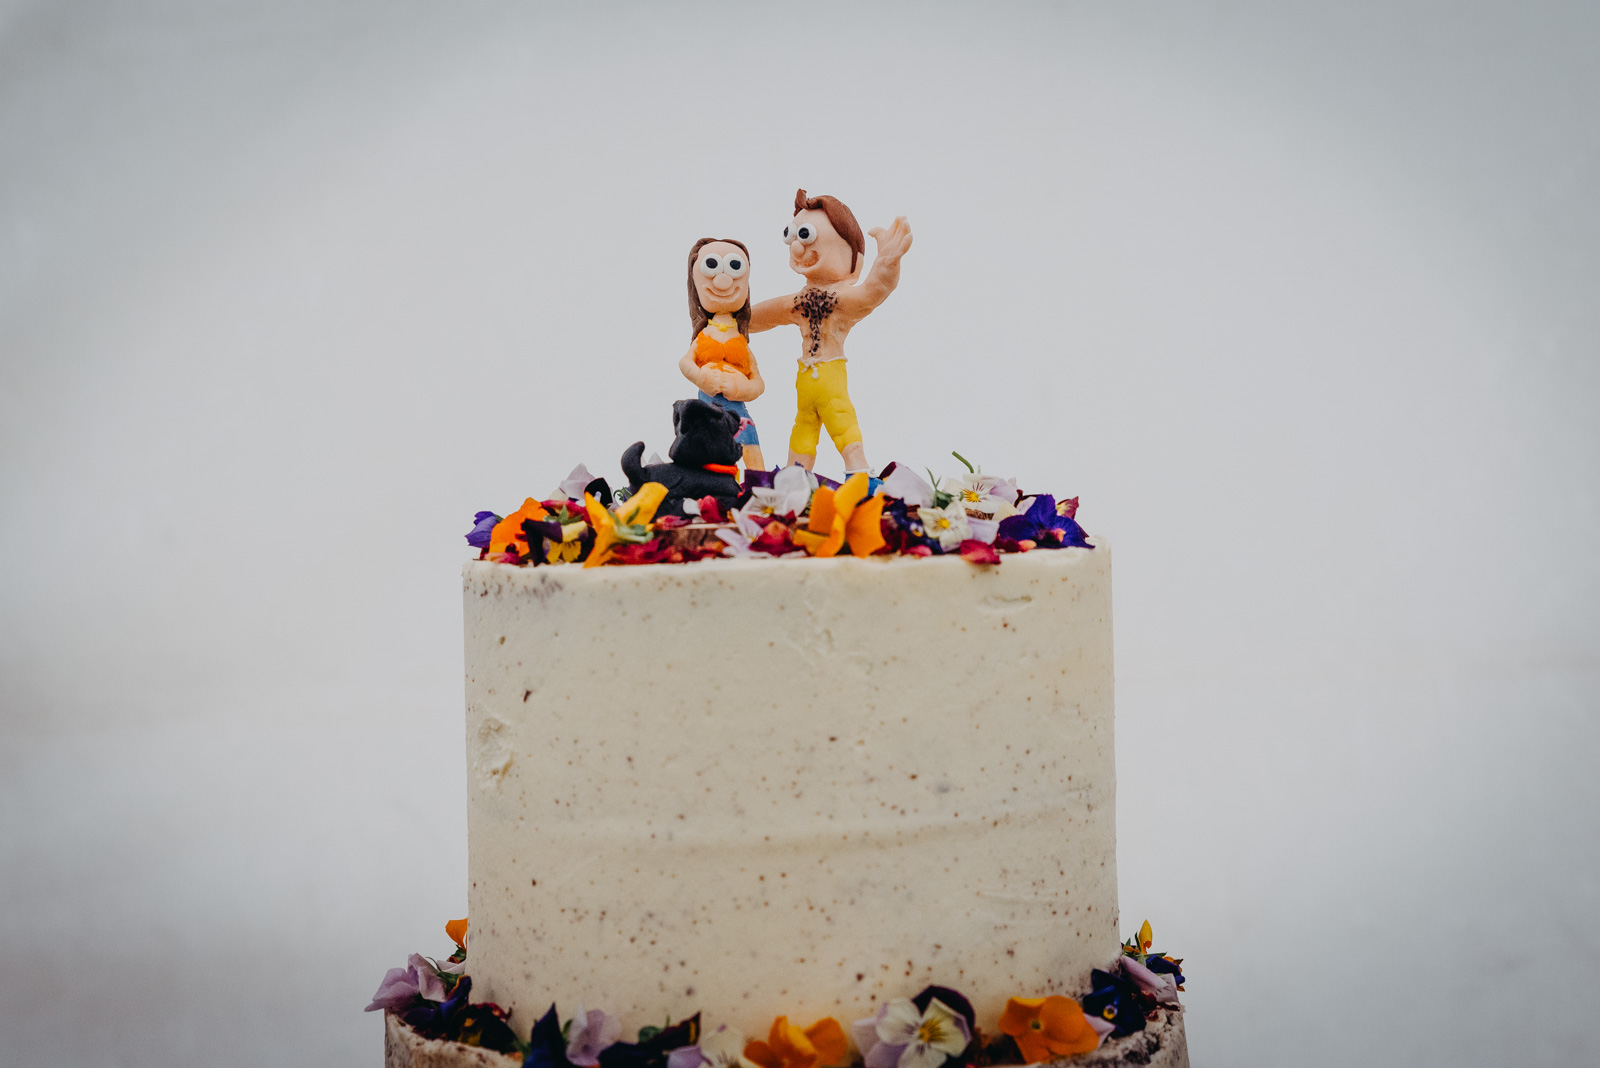 Festival style wedding in Glastonbury - the cake